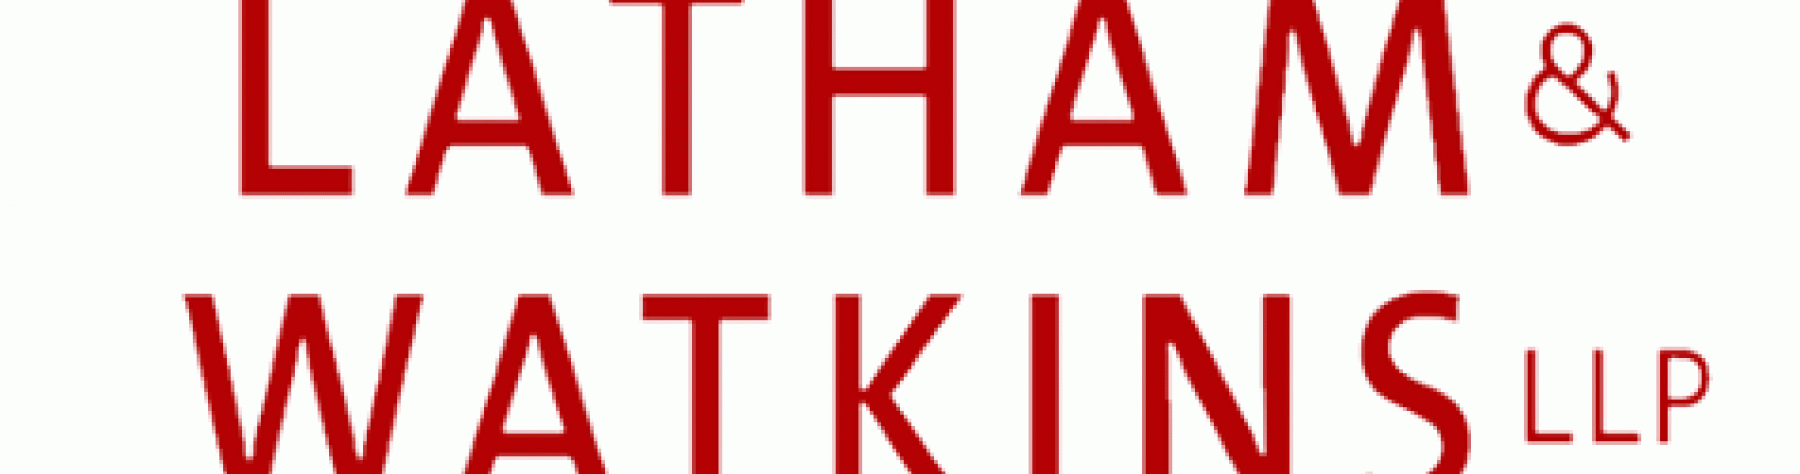 Latham & Watkins Logo - Hours at Latham & Watkins | employer reviews by graduates | TARGETjobs